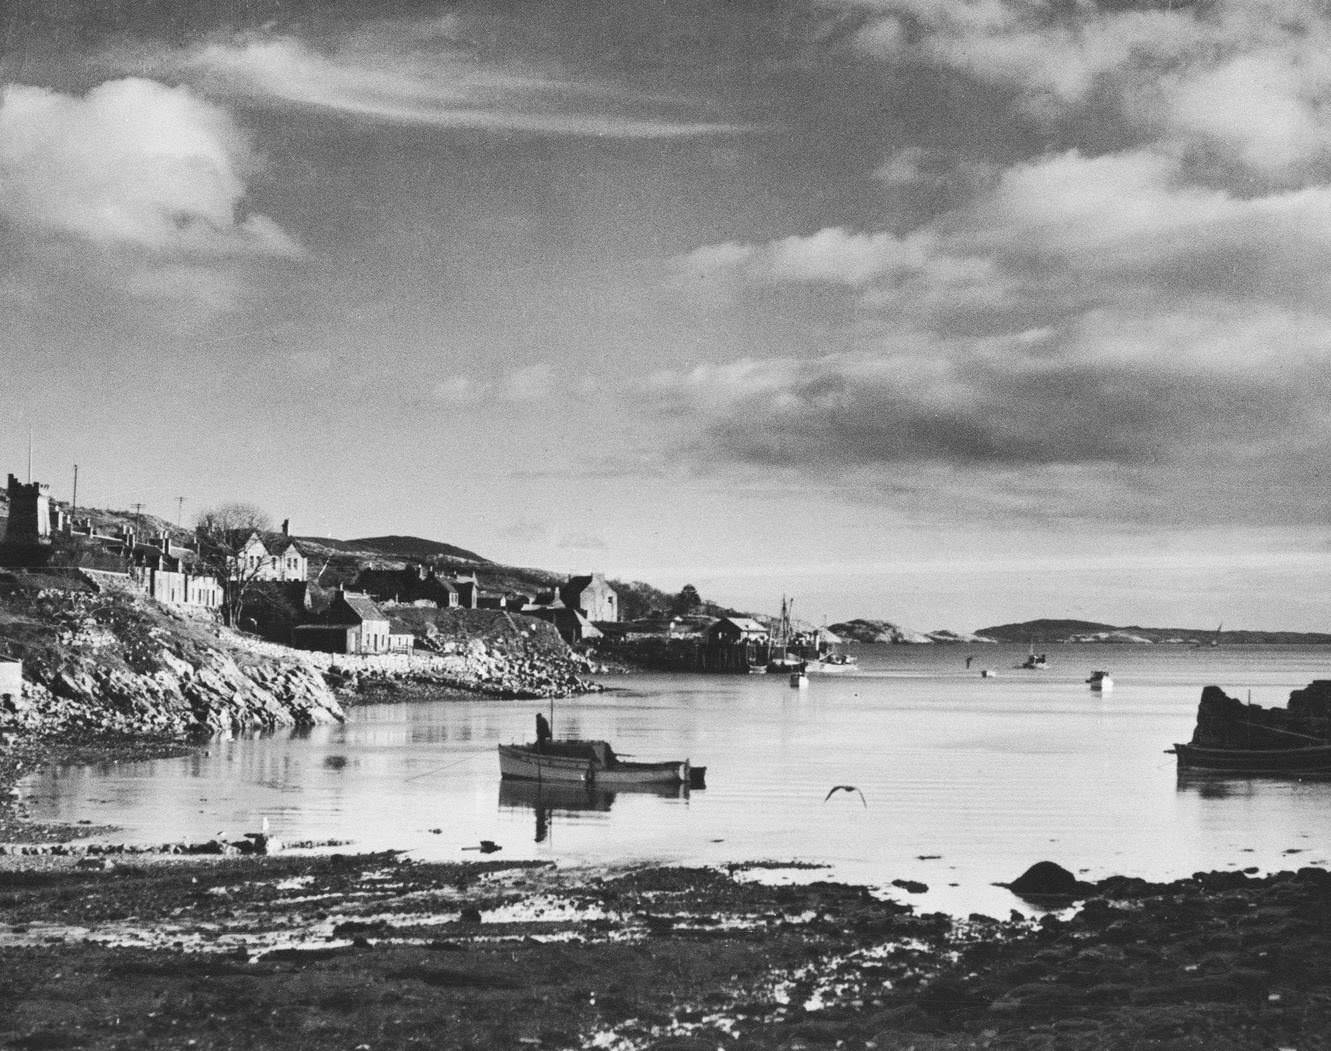 Harbour scene in the Hebrides, Scotland, 1960.